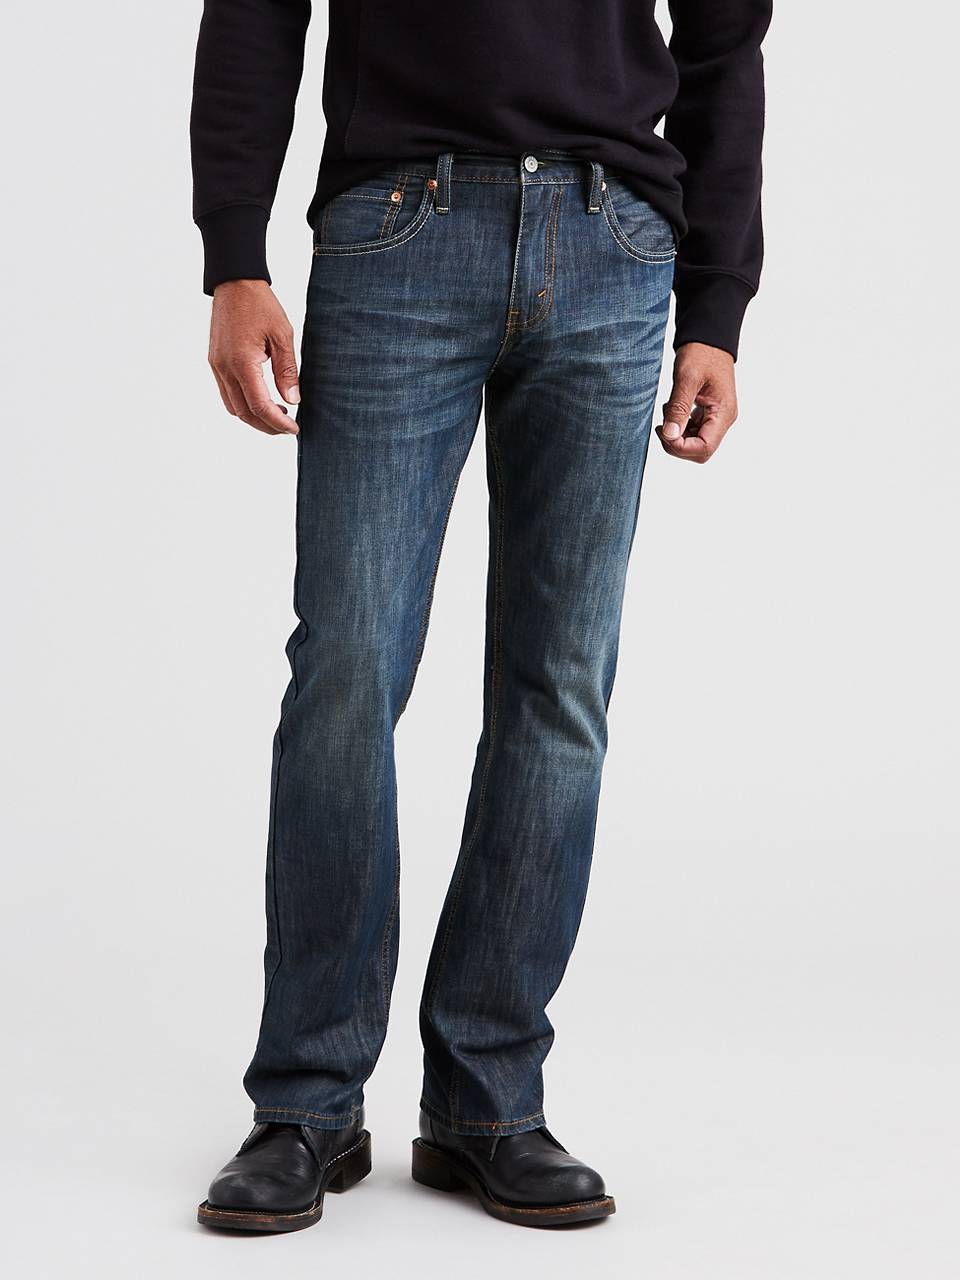 Beurs Zonder hoofd Microcomputer Men's Bootcut Jeans: Shop Bootcut Jeans for Men| Levi's® US